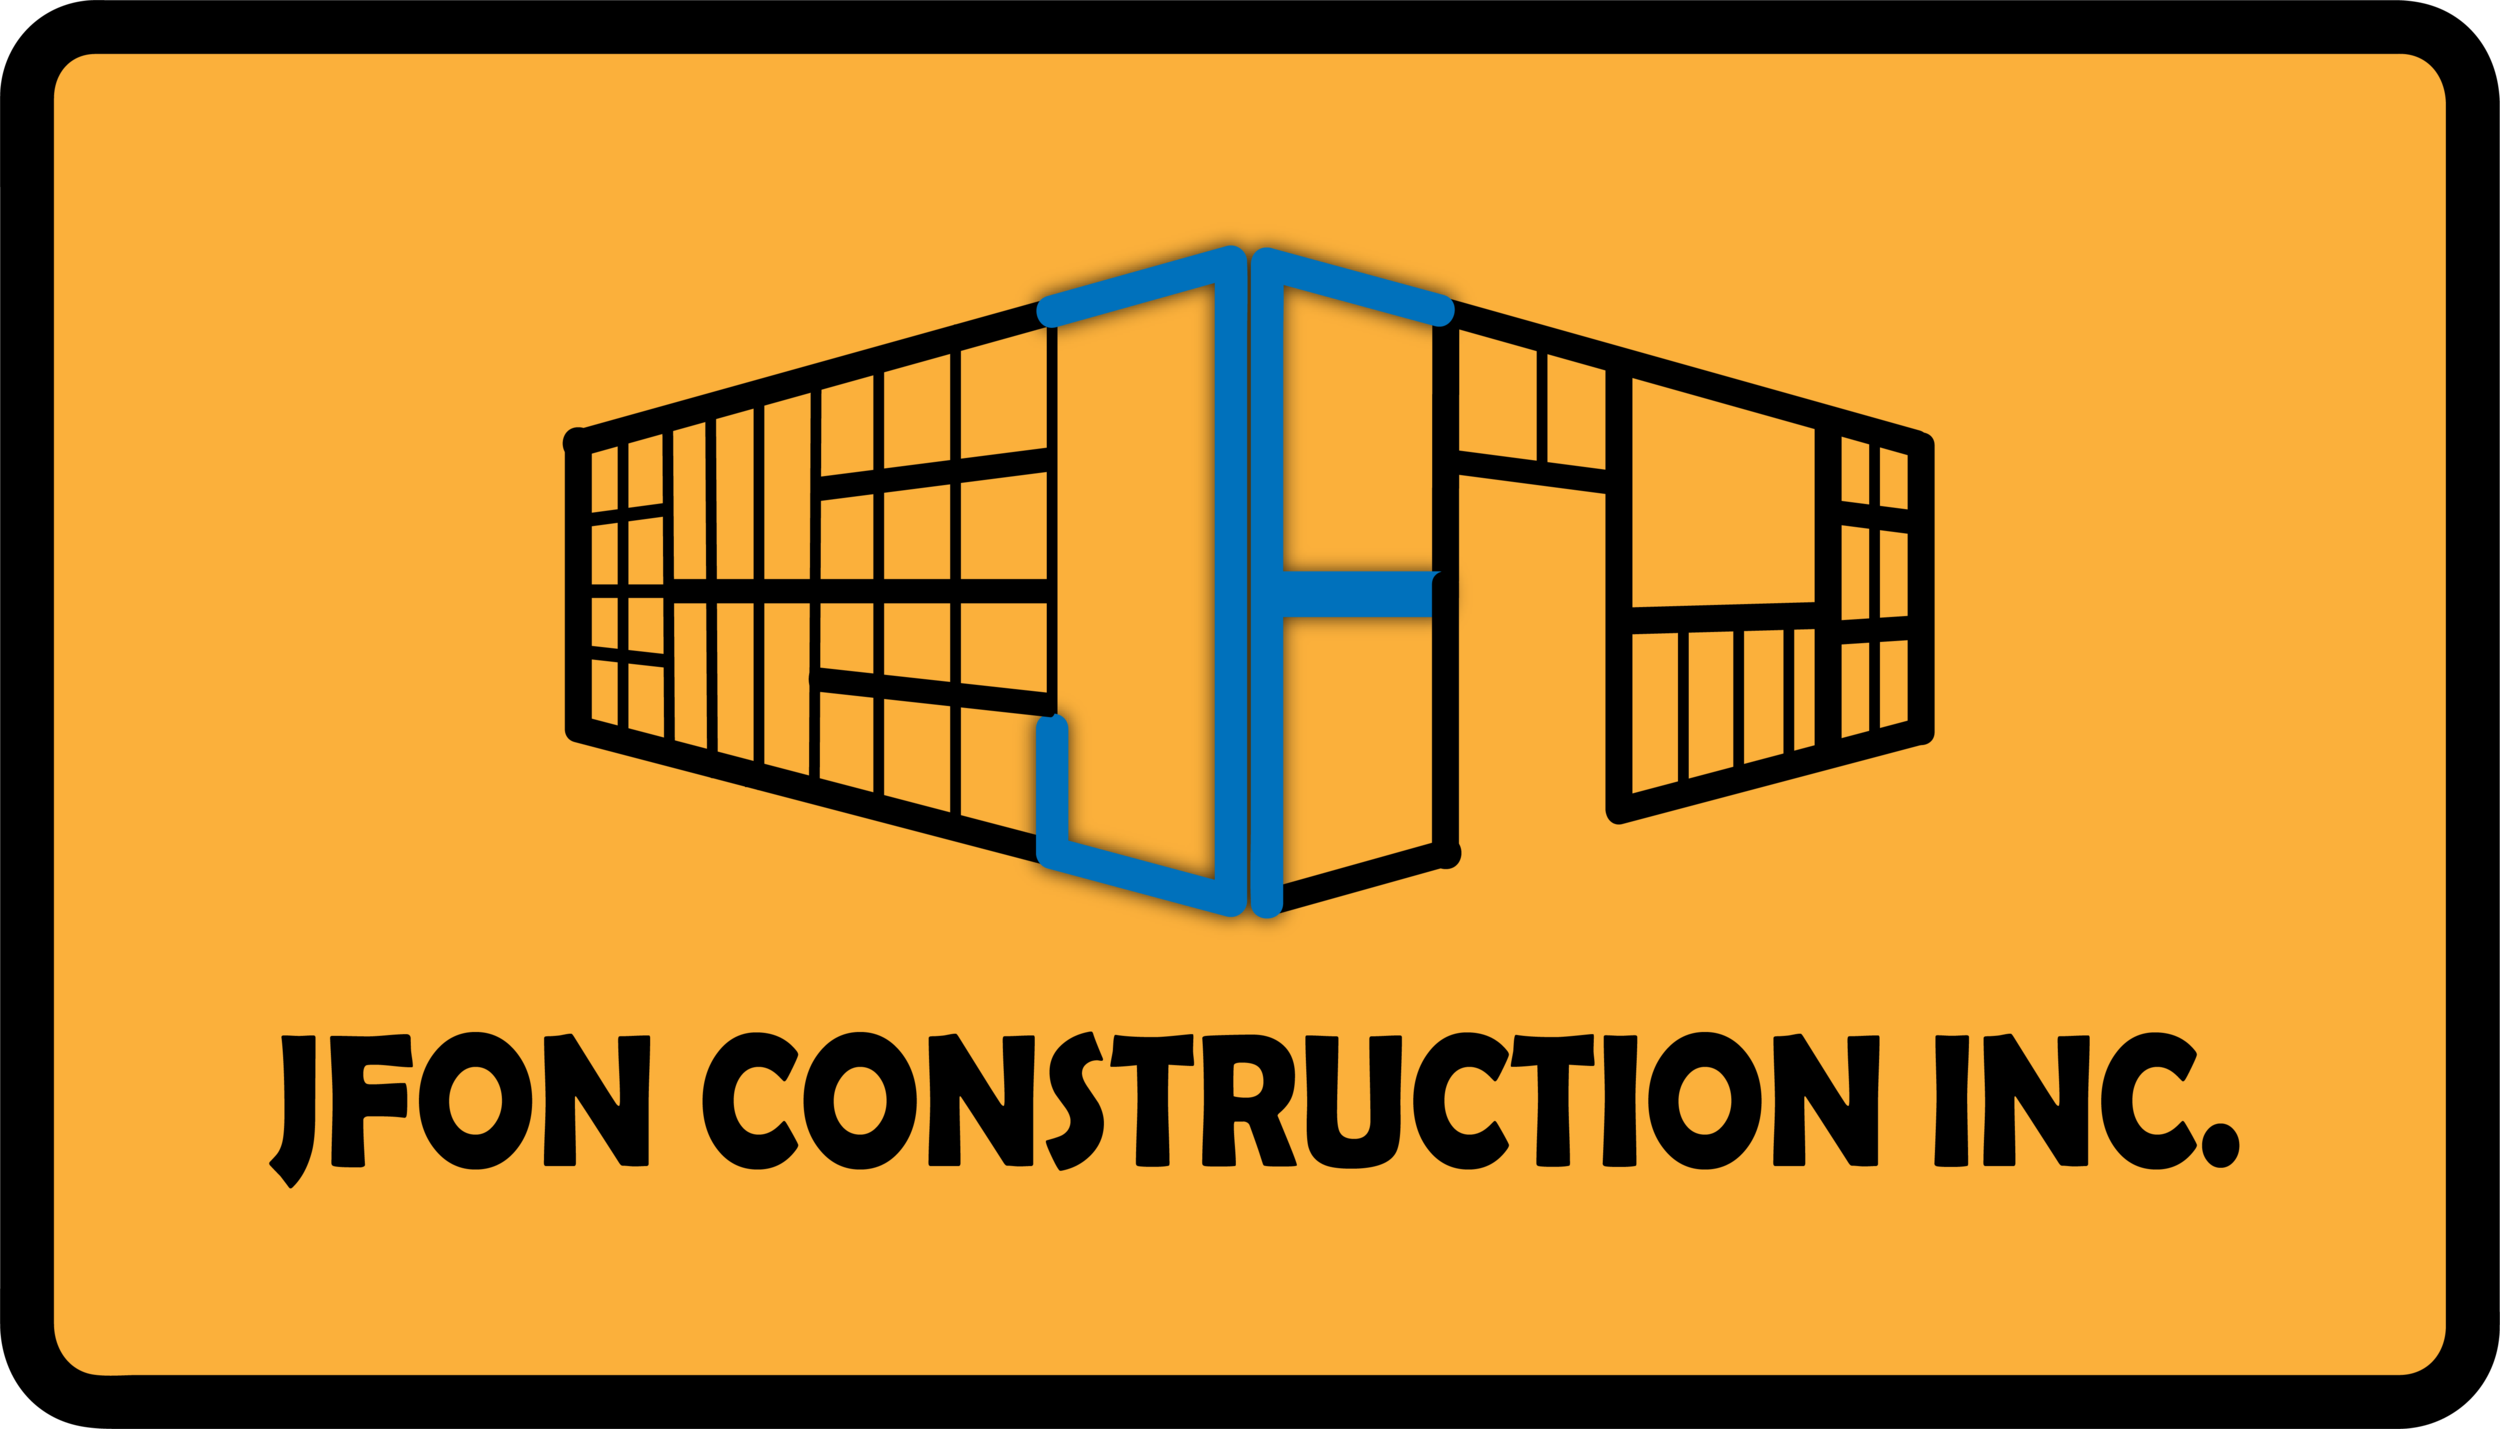 JFON CONSTRUCTION INC.